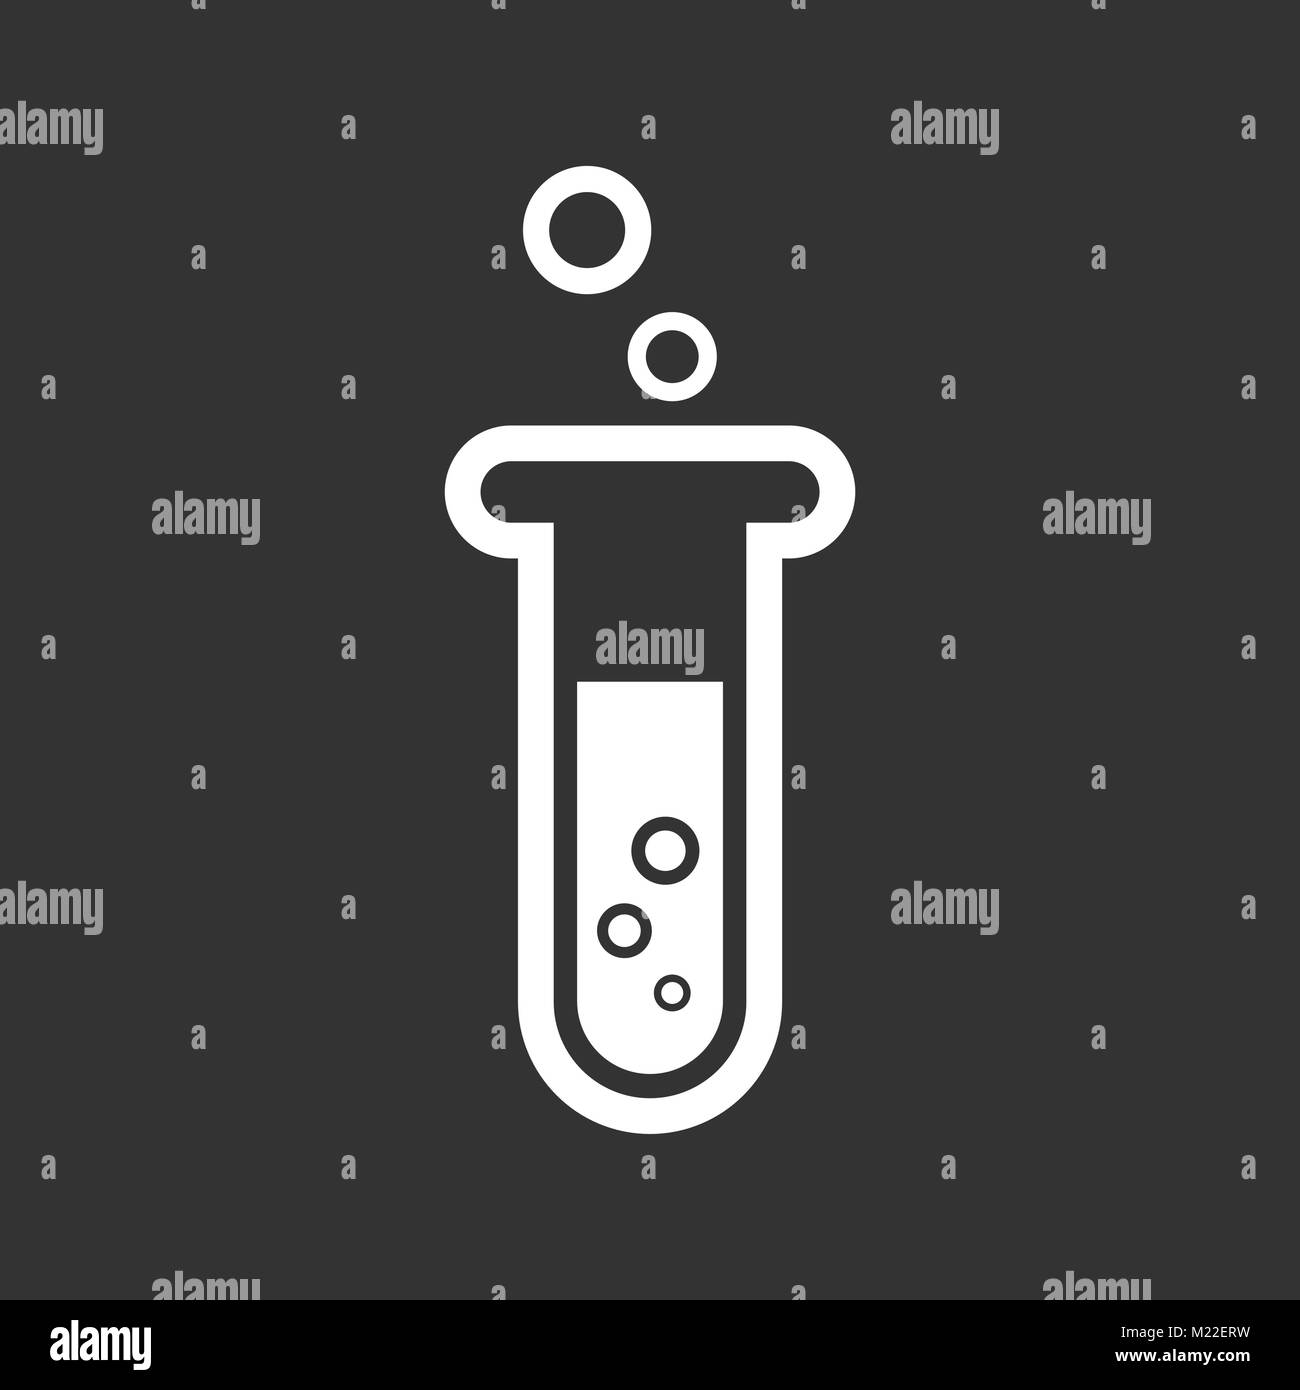 Chemical test tube pictogram icon. Laboratory glassware or beaker equipment isolated on black background. Experiment flasks. Trendy modern vector symb Stock Vector